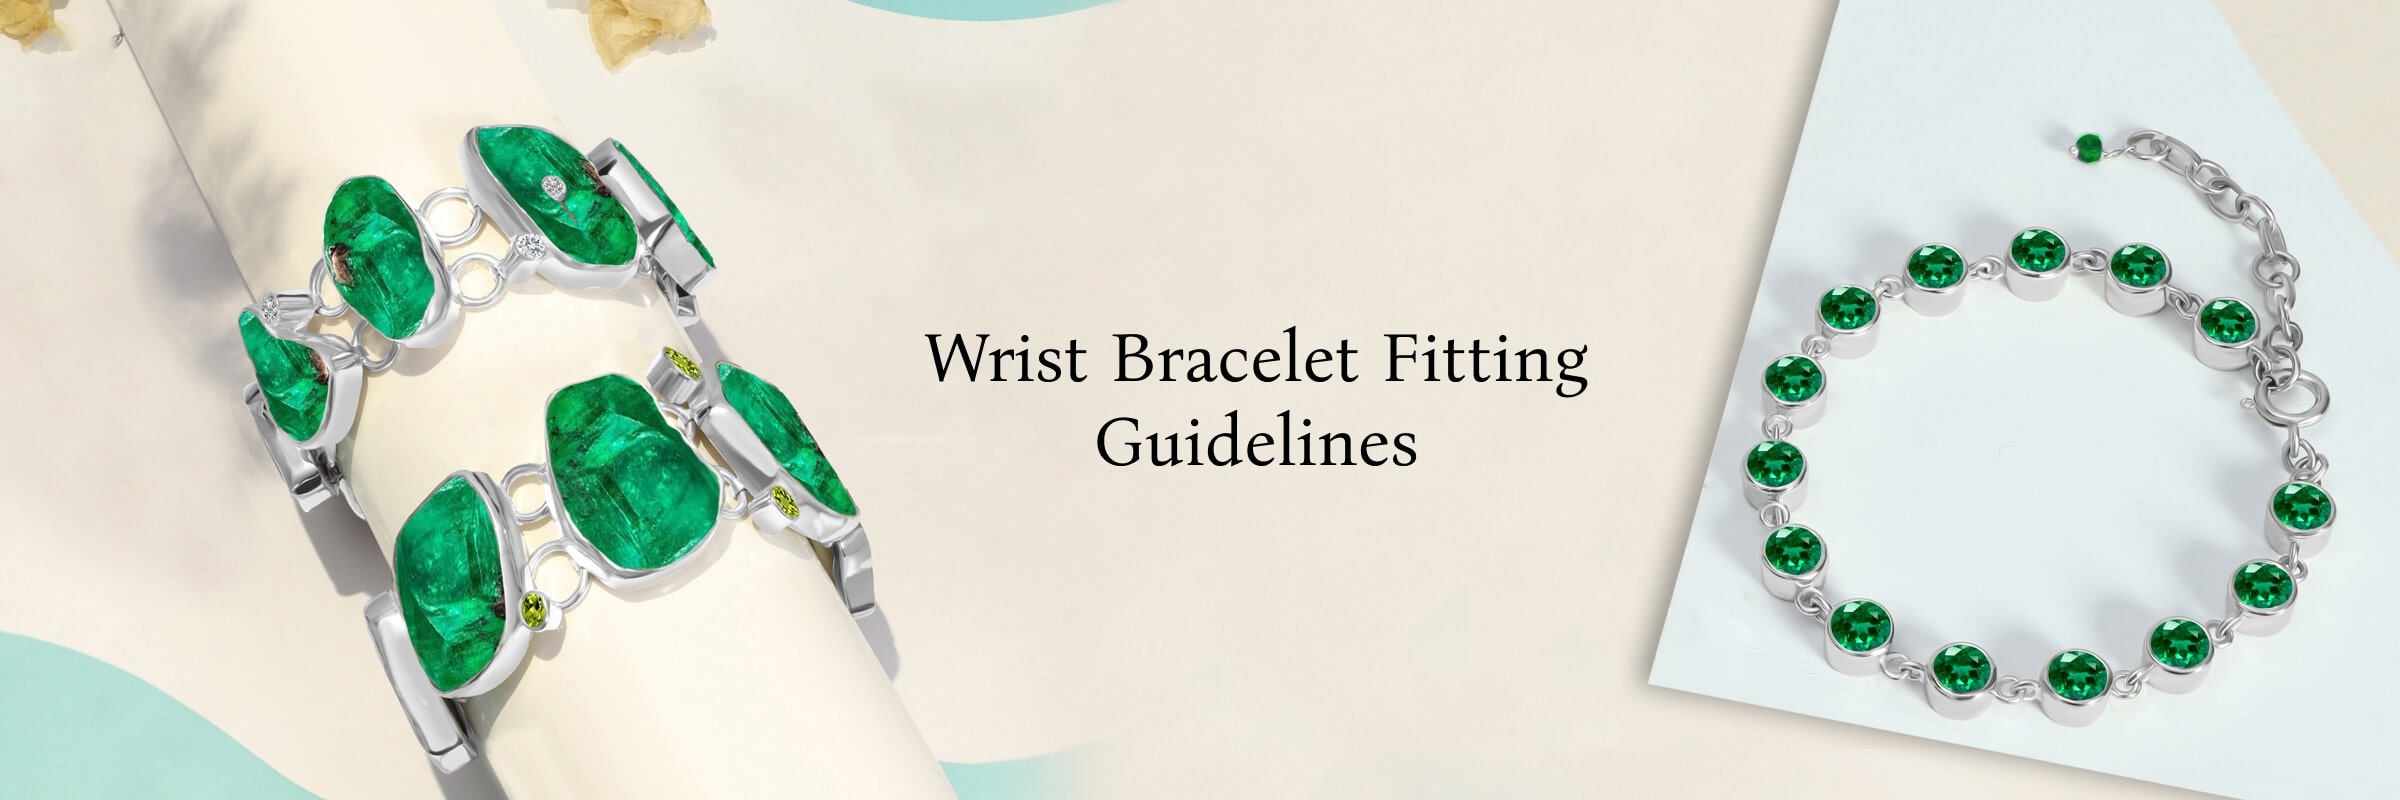 How Should a Bracelet Fit on Your Wrist?